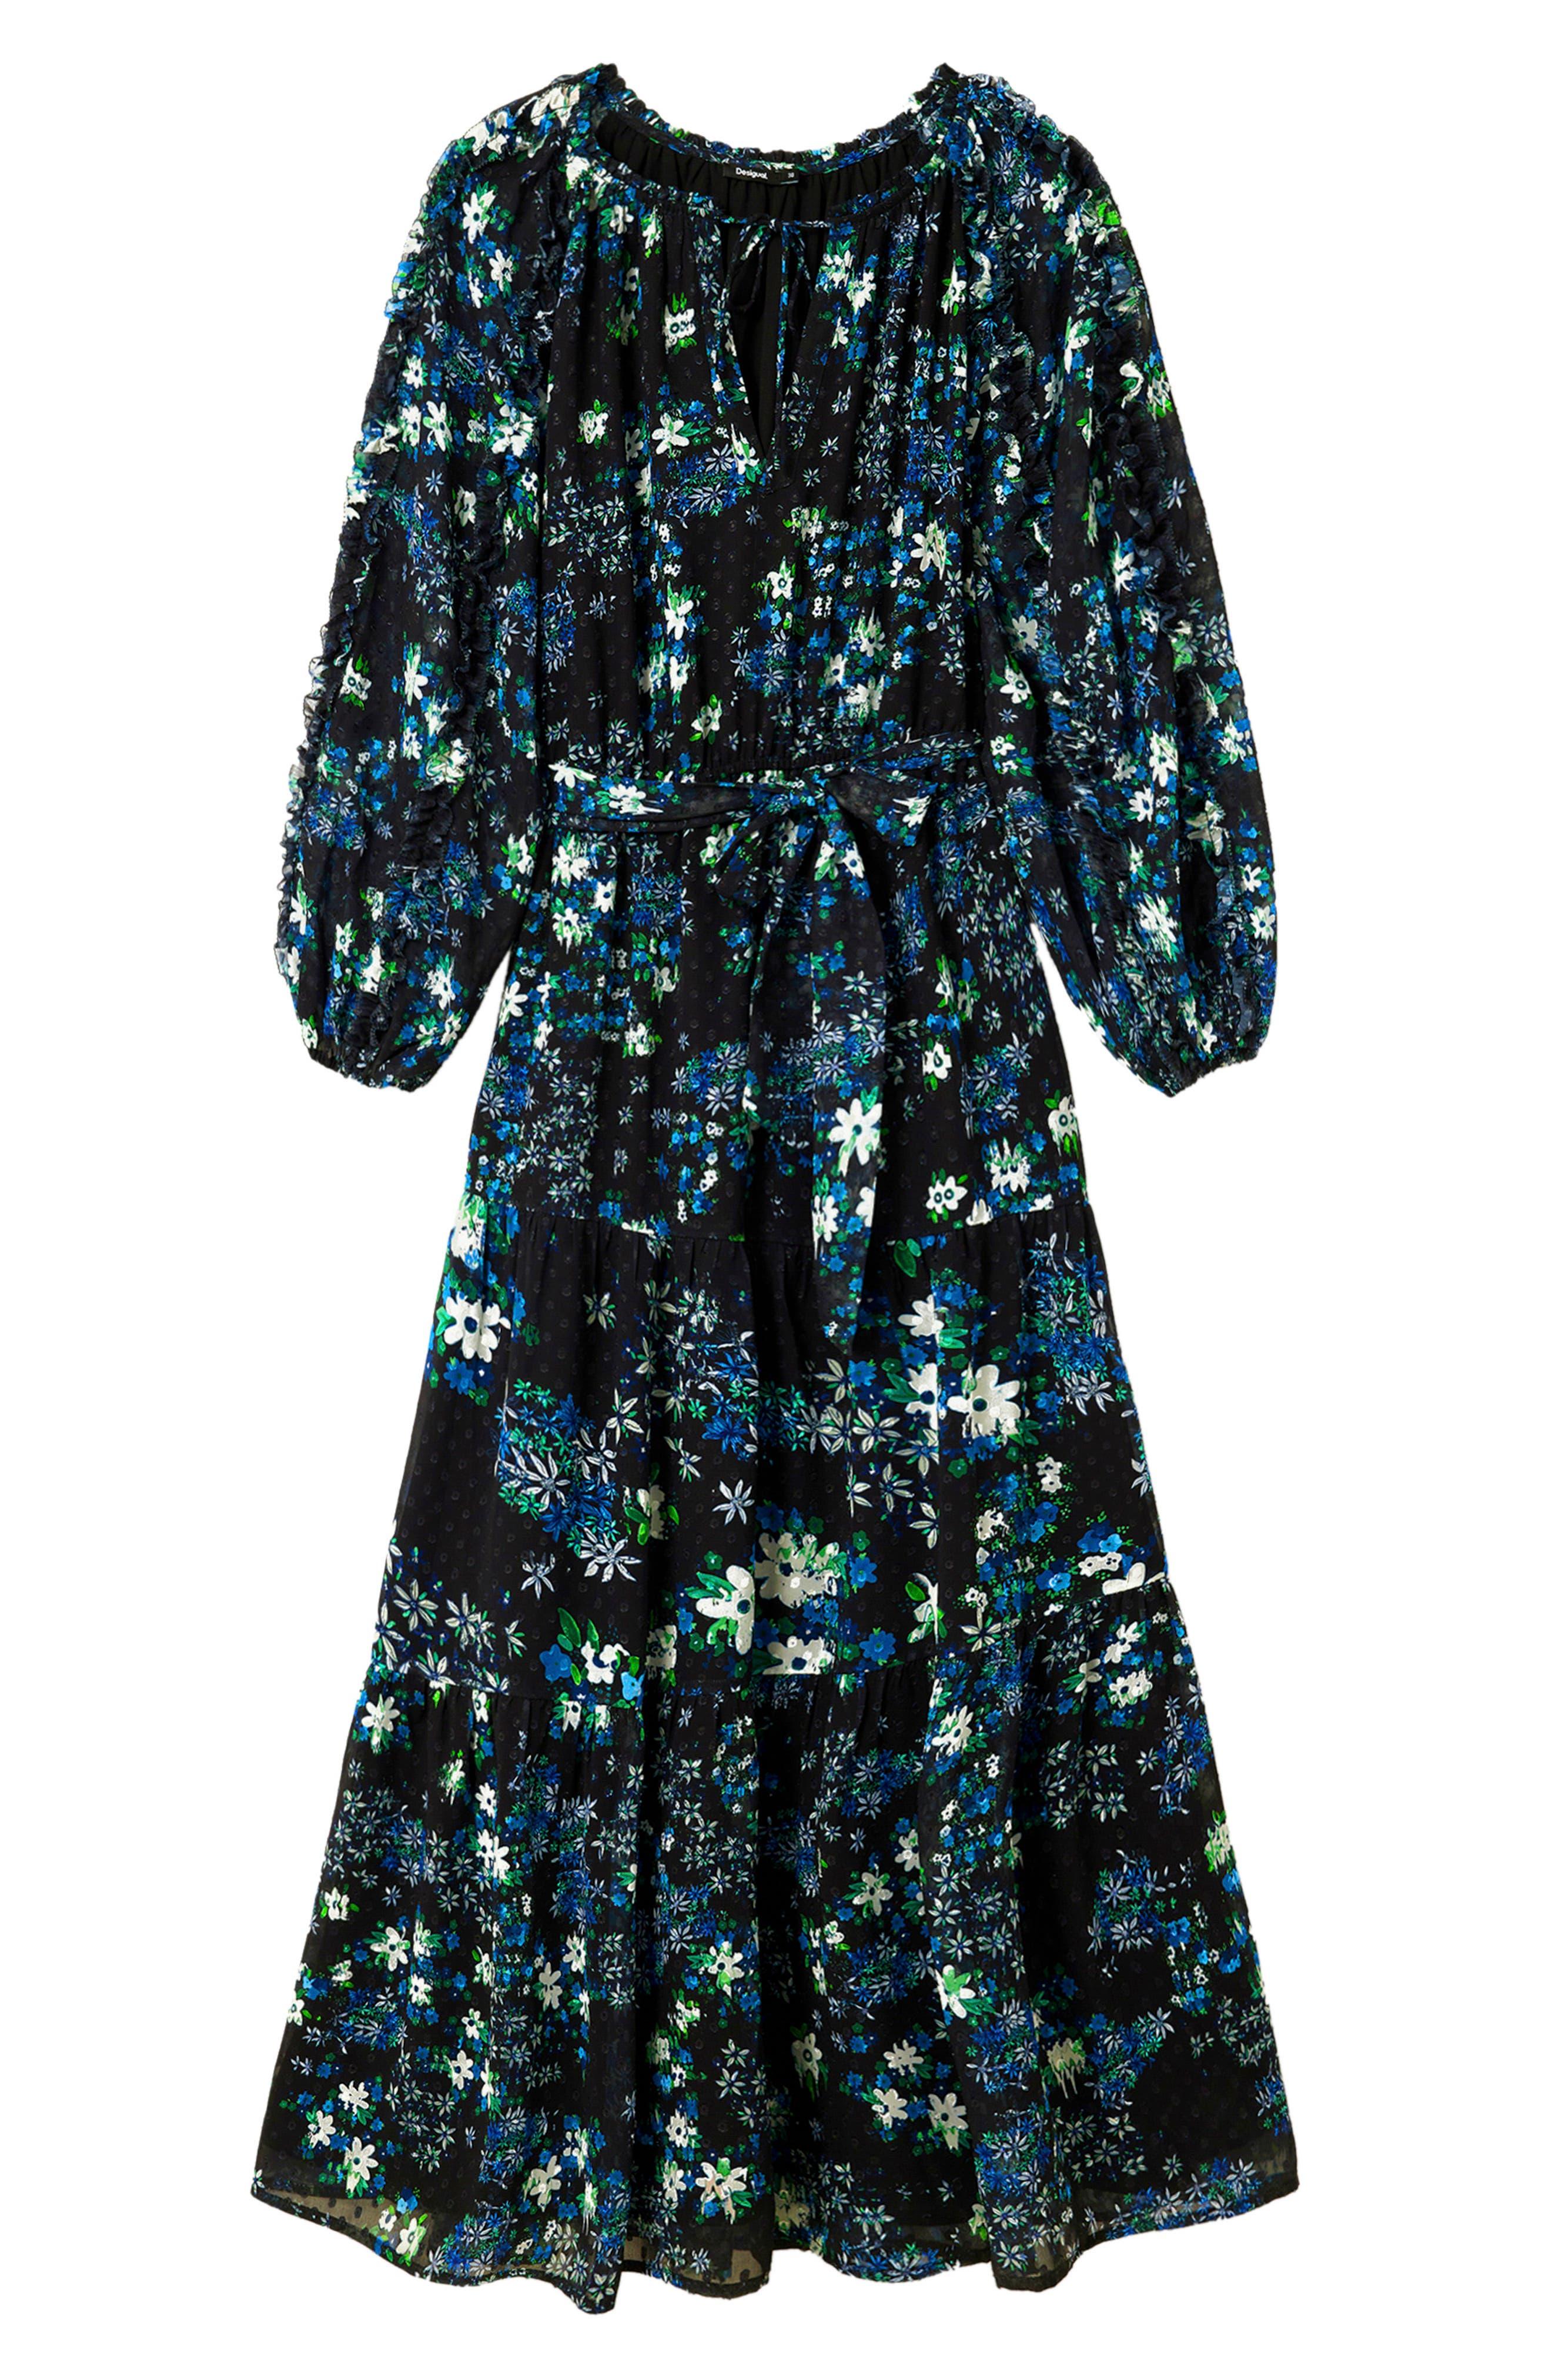 Desigual Rhode Island Floral Print Long Sleeve Maxi Dress in Black | Lyst